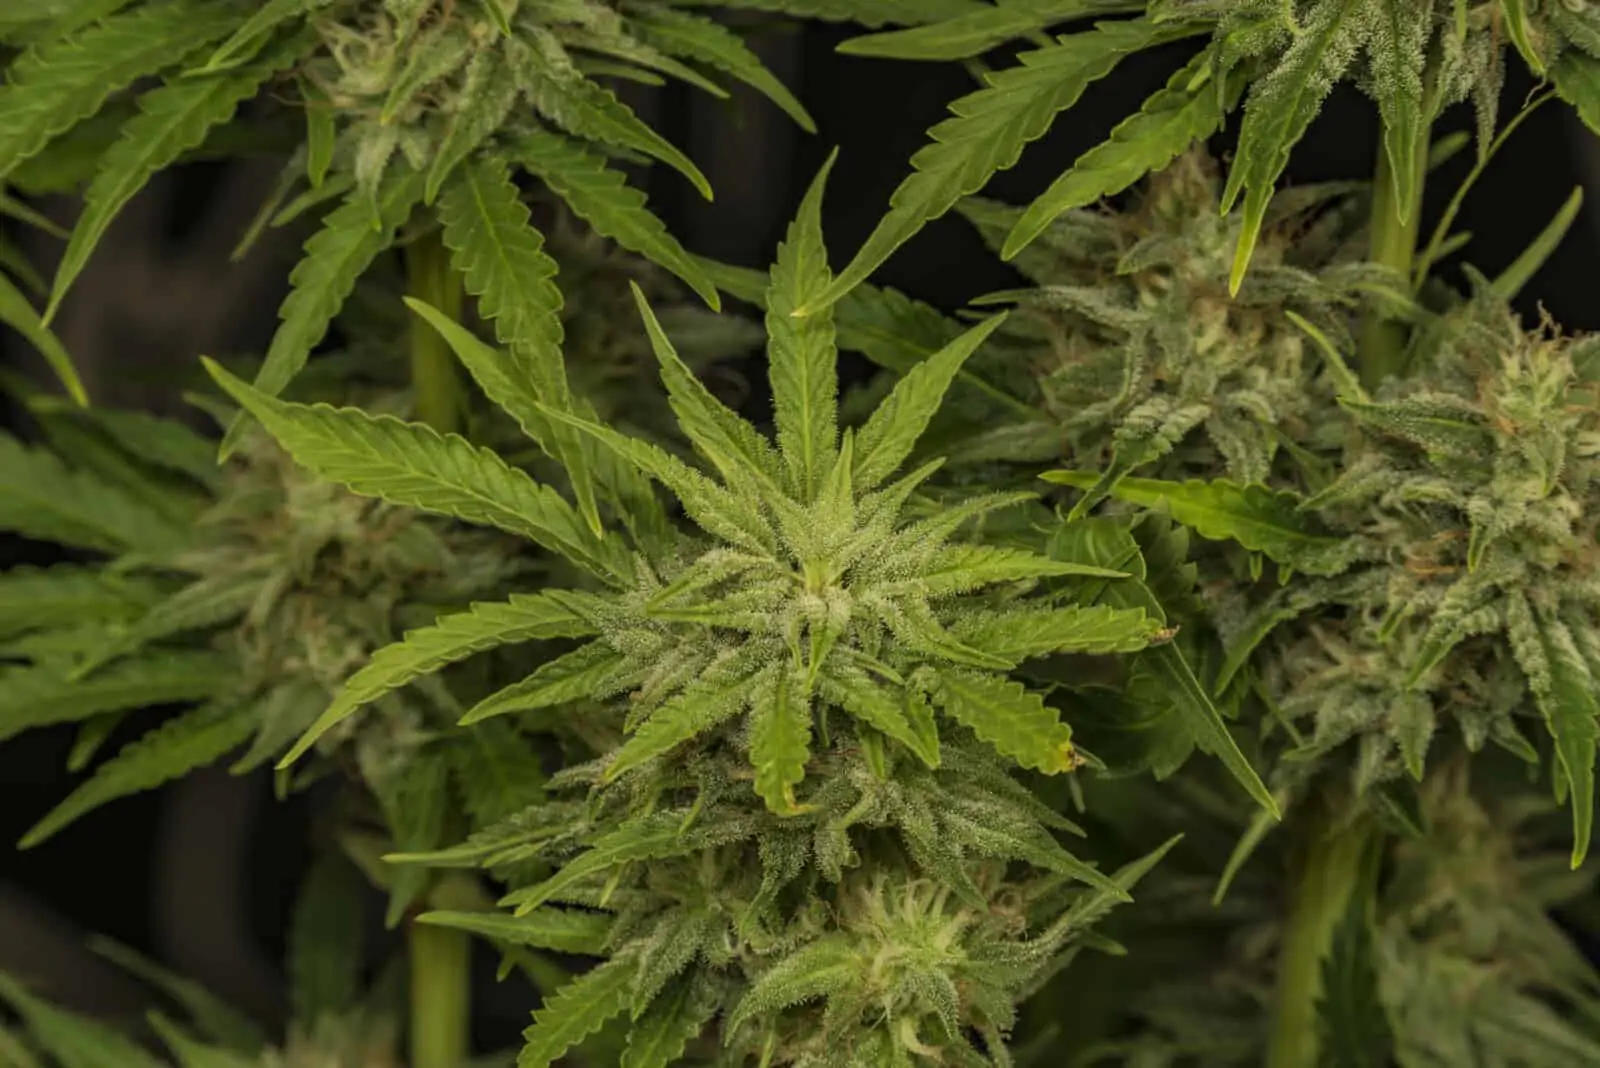 Bubba Kush Marijuana Strain Review. Green marijuana plants